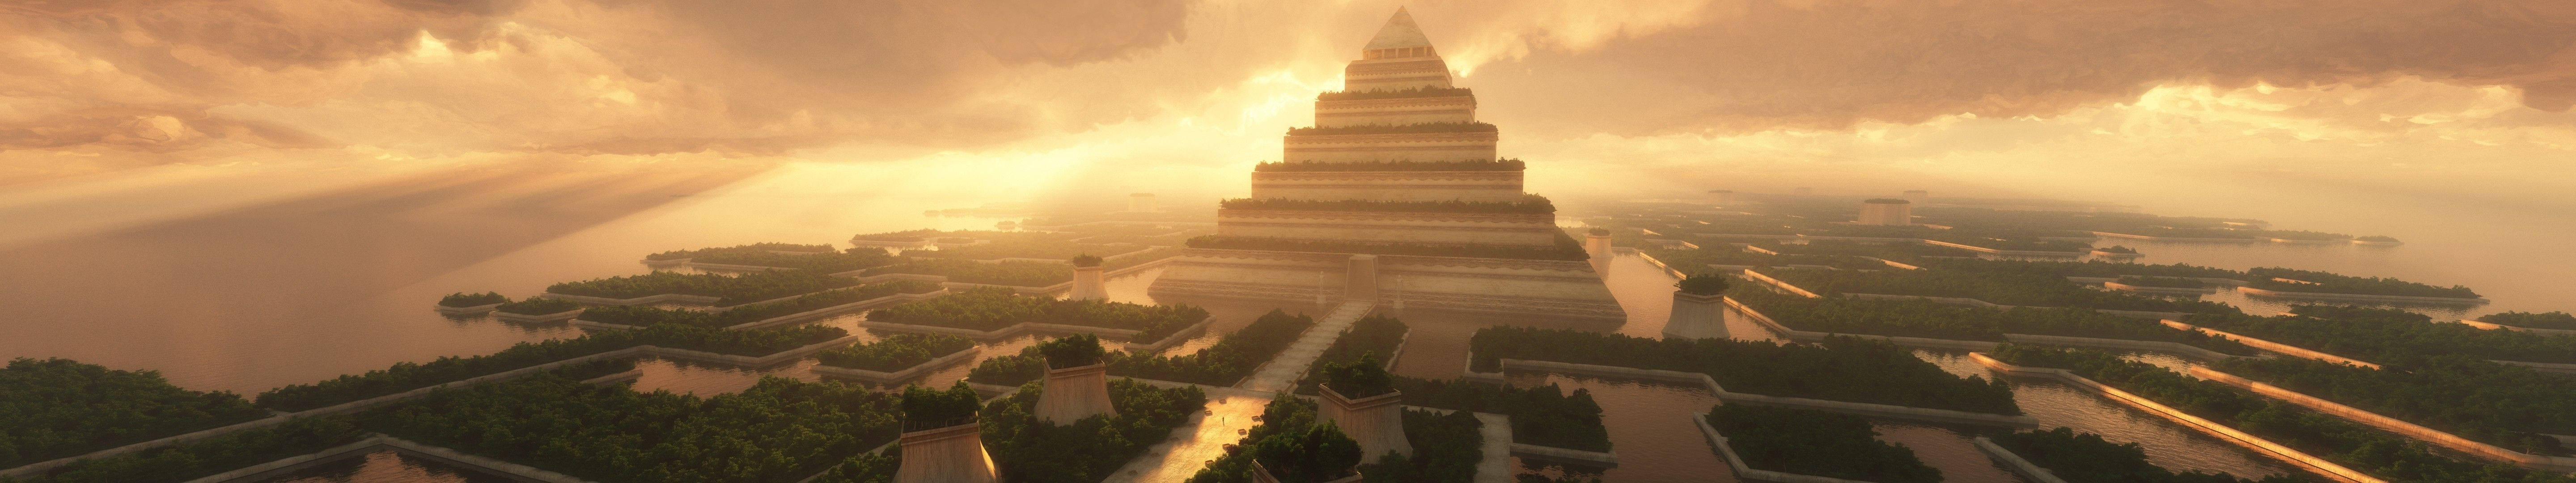 SEO  "Mesmerizing Fantasy Architecture Pyramid Gardens in Glorious 5K Resolution" Wallpaper